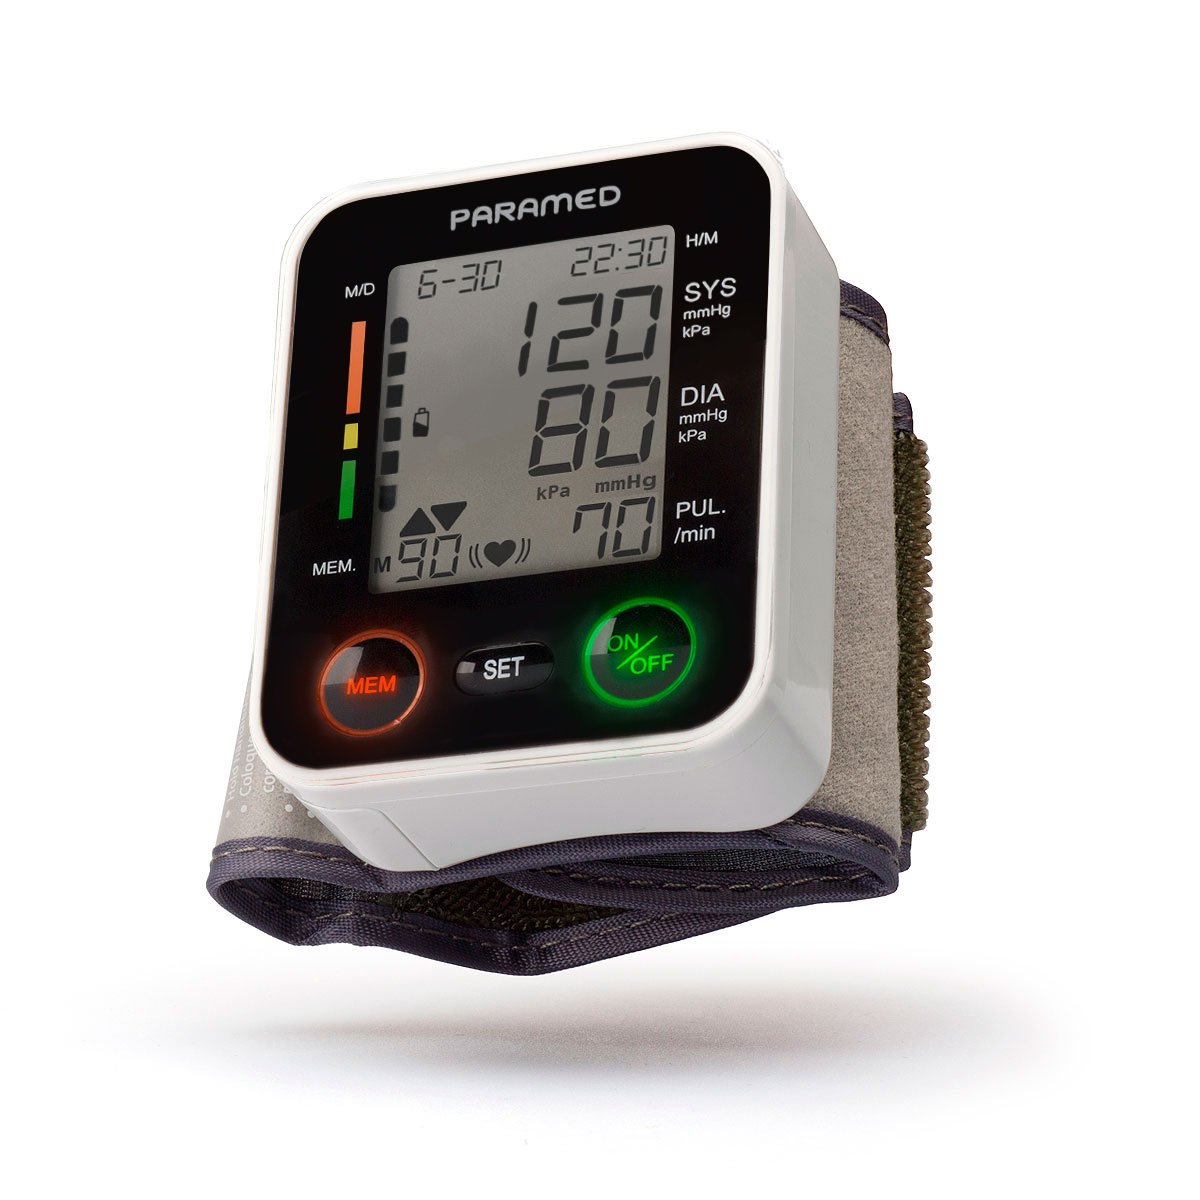 https://www.dontwasteyourmoney.com/wp-content/uploads/2020/03/paramed-automatic-wrist-blood-pressure-monitor-blood-pressure-monitor-for-home-use.jpg